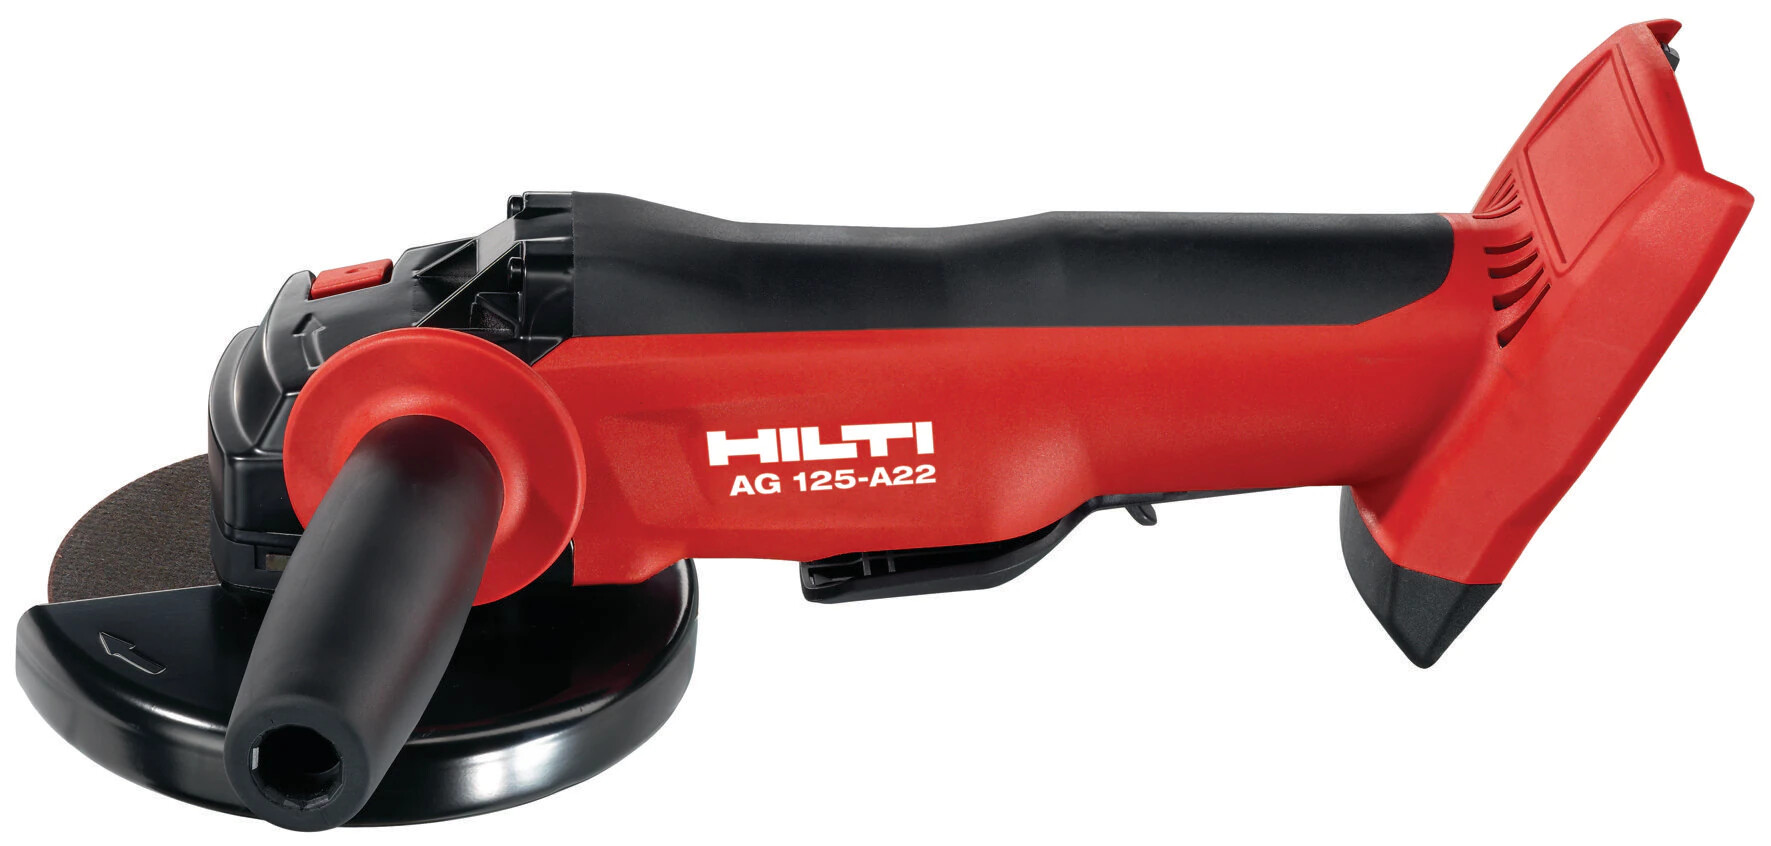 Hilti AG 125-A22 Cordless Grinder